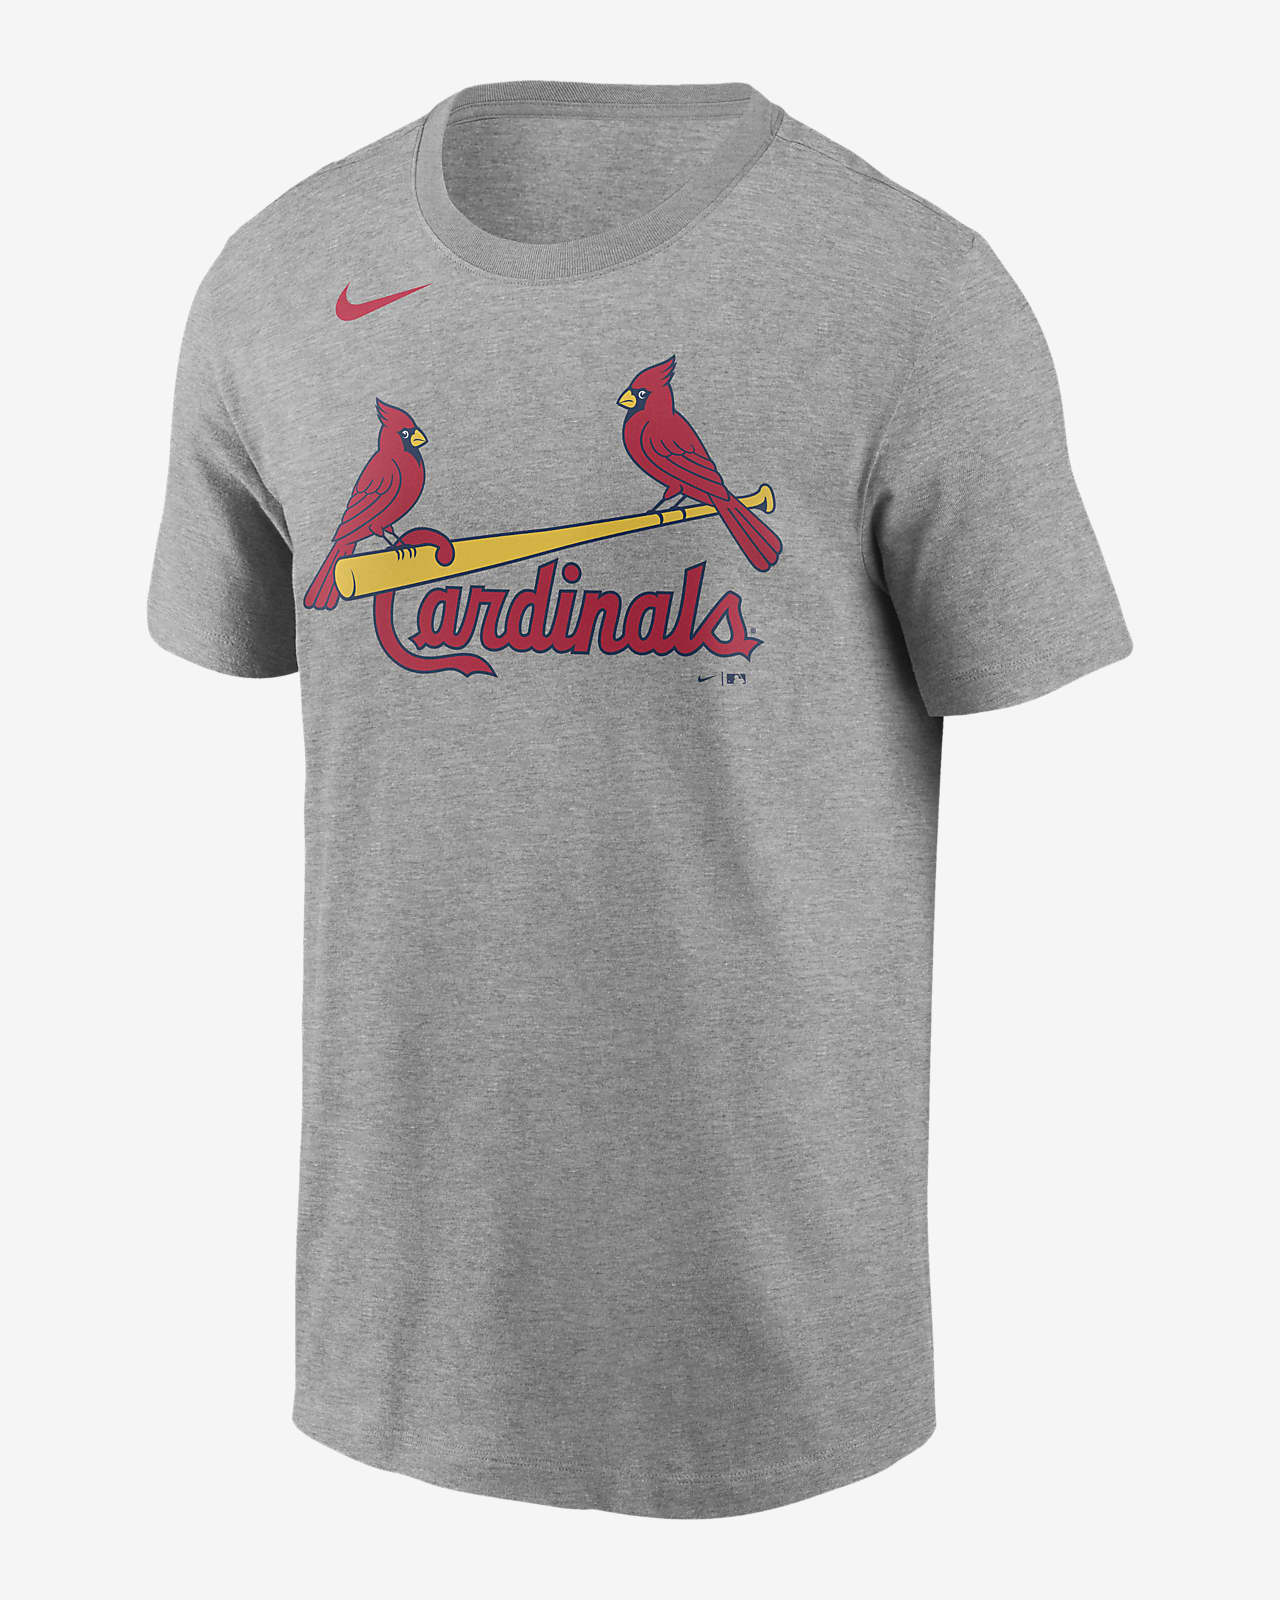 st louis cardinals playoff shirts